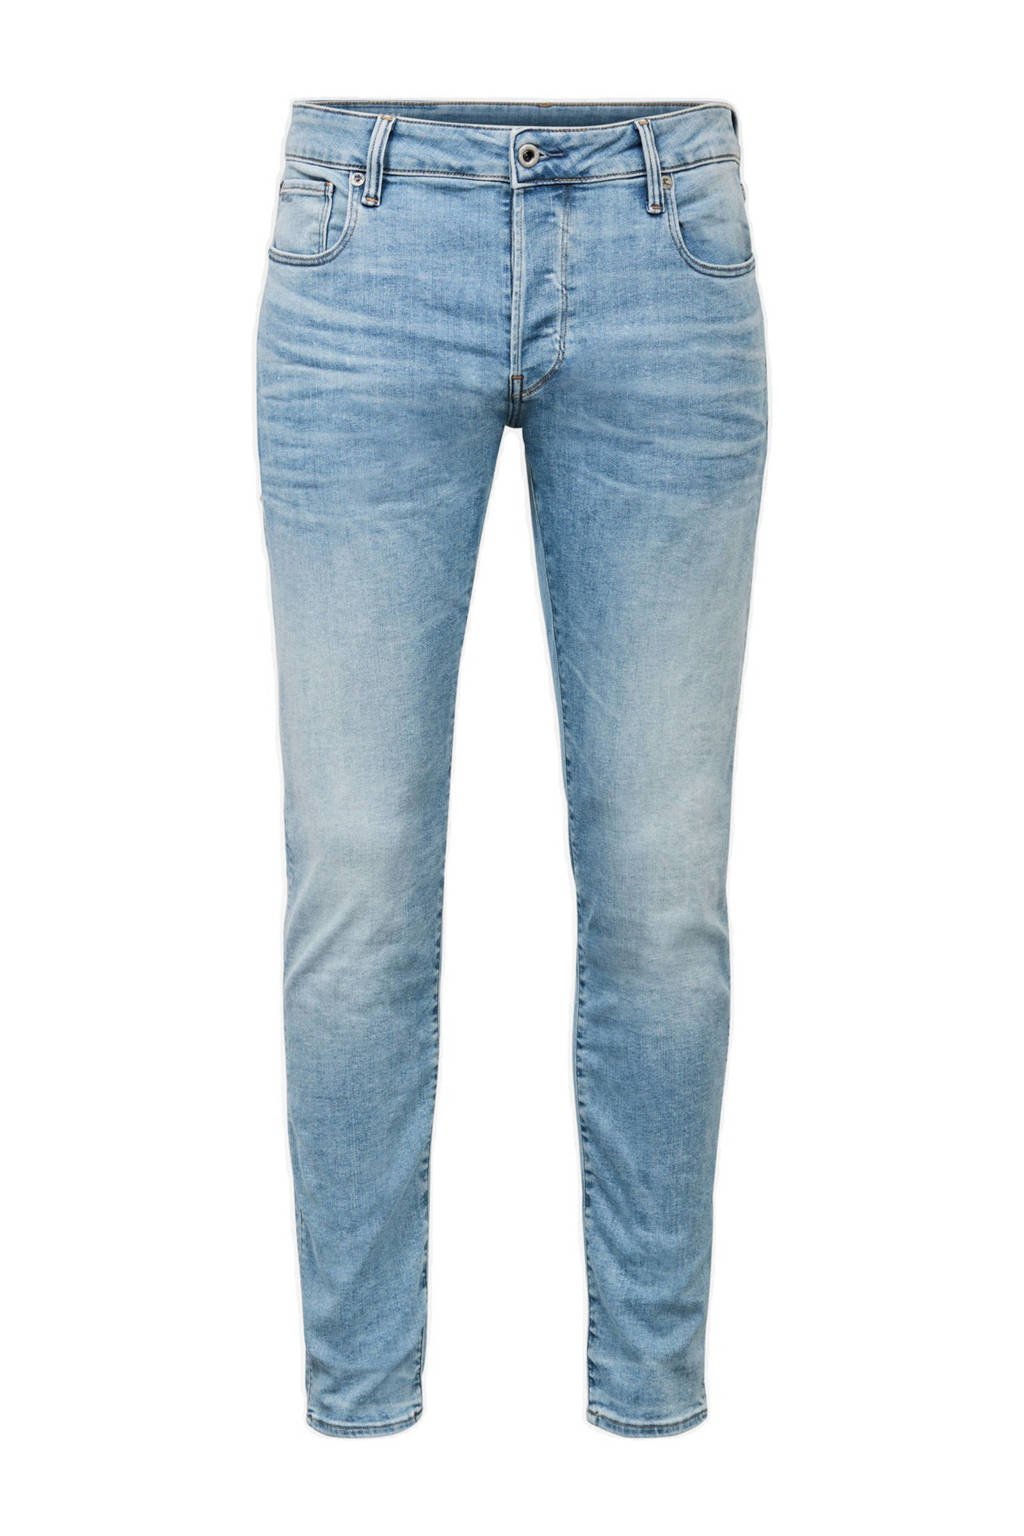 G-Star RAW 3301 slim fit jeans lt indigo aged